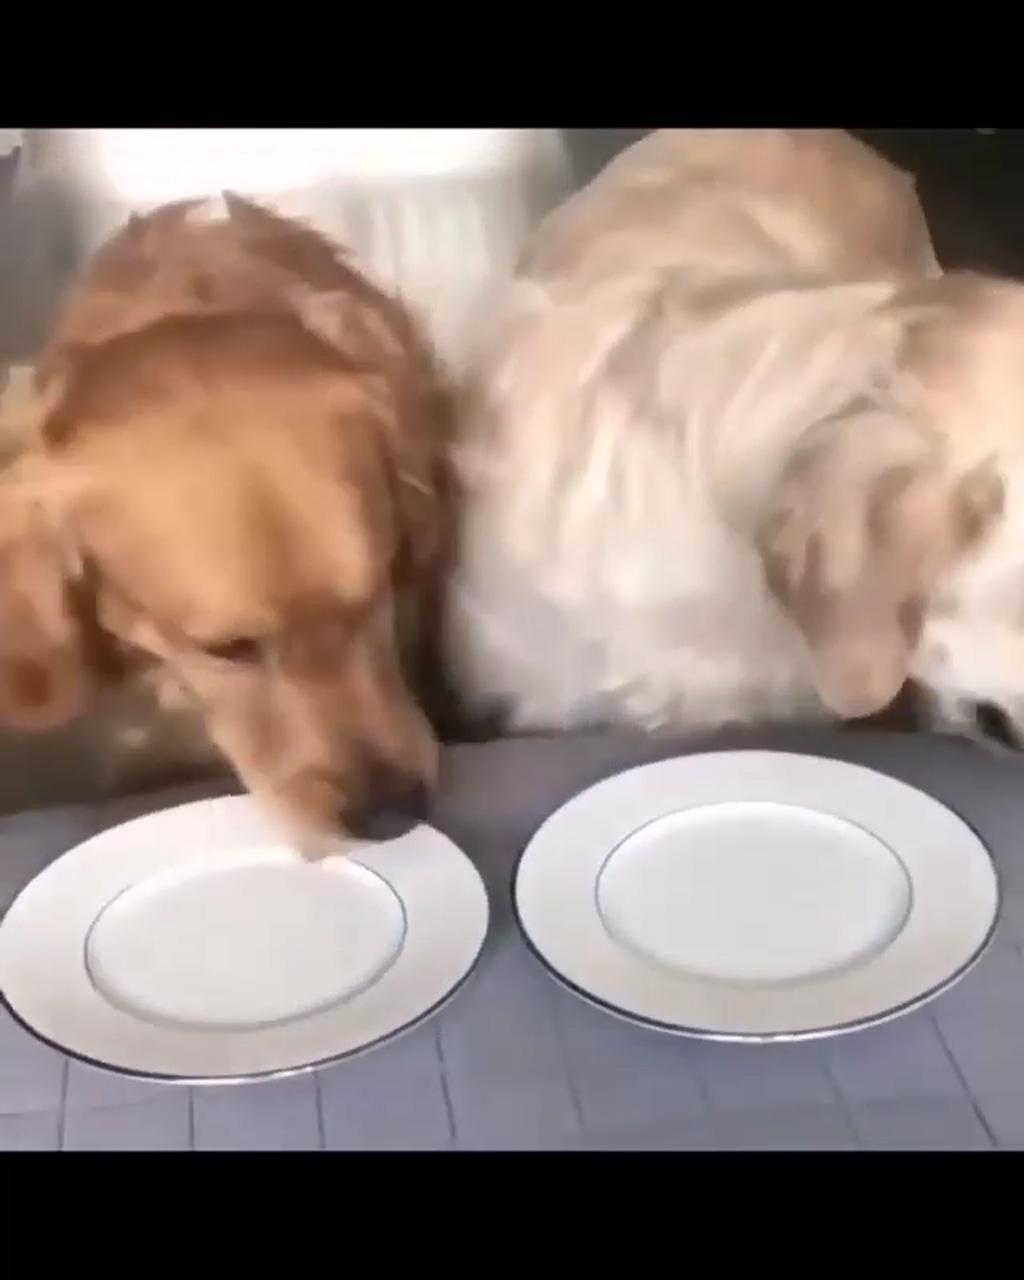 So hungry; cute labrador puppies